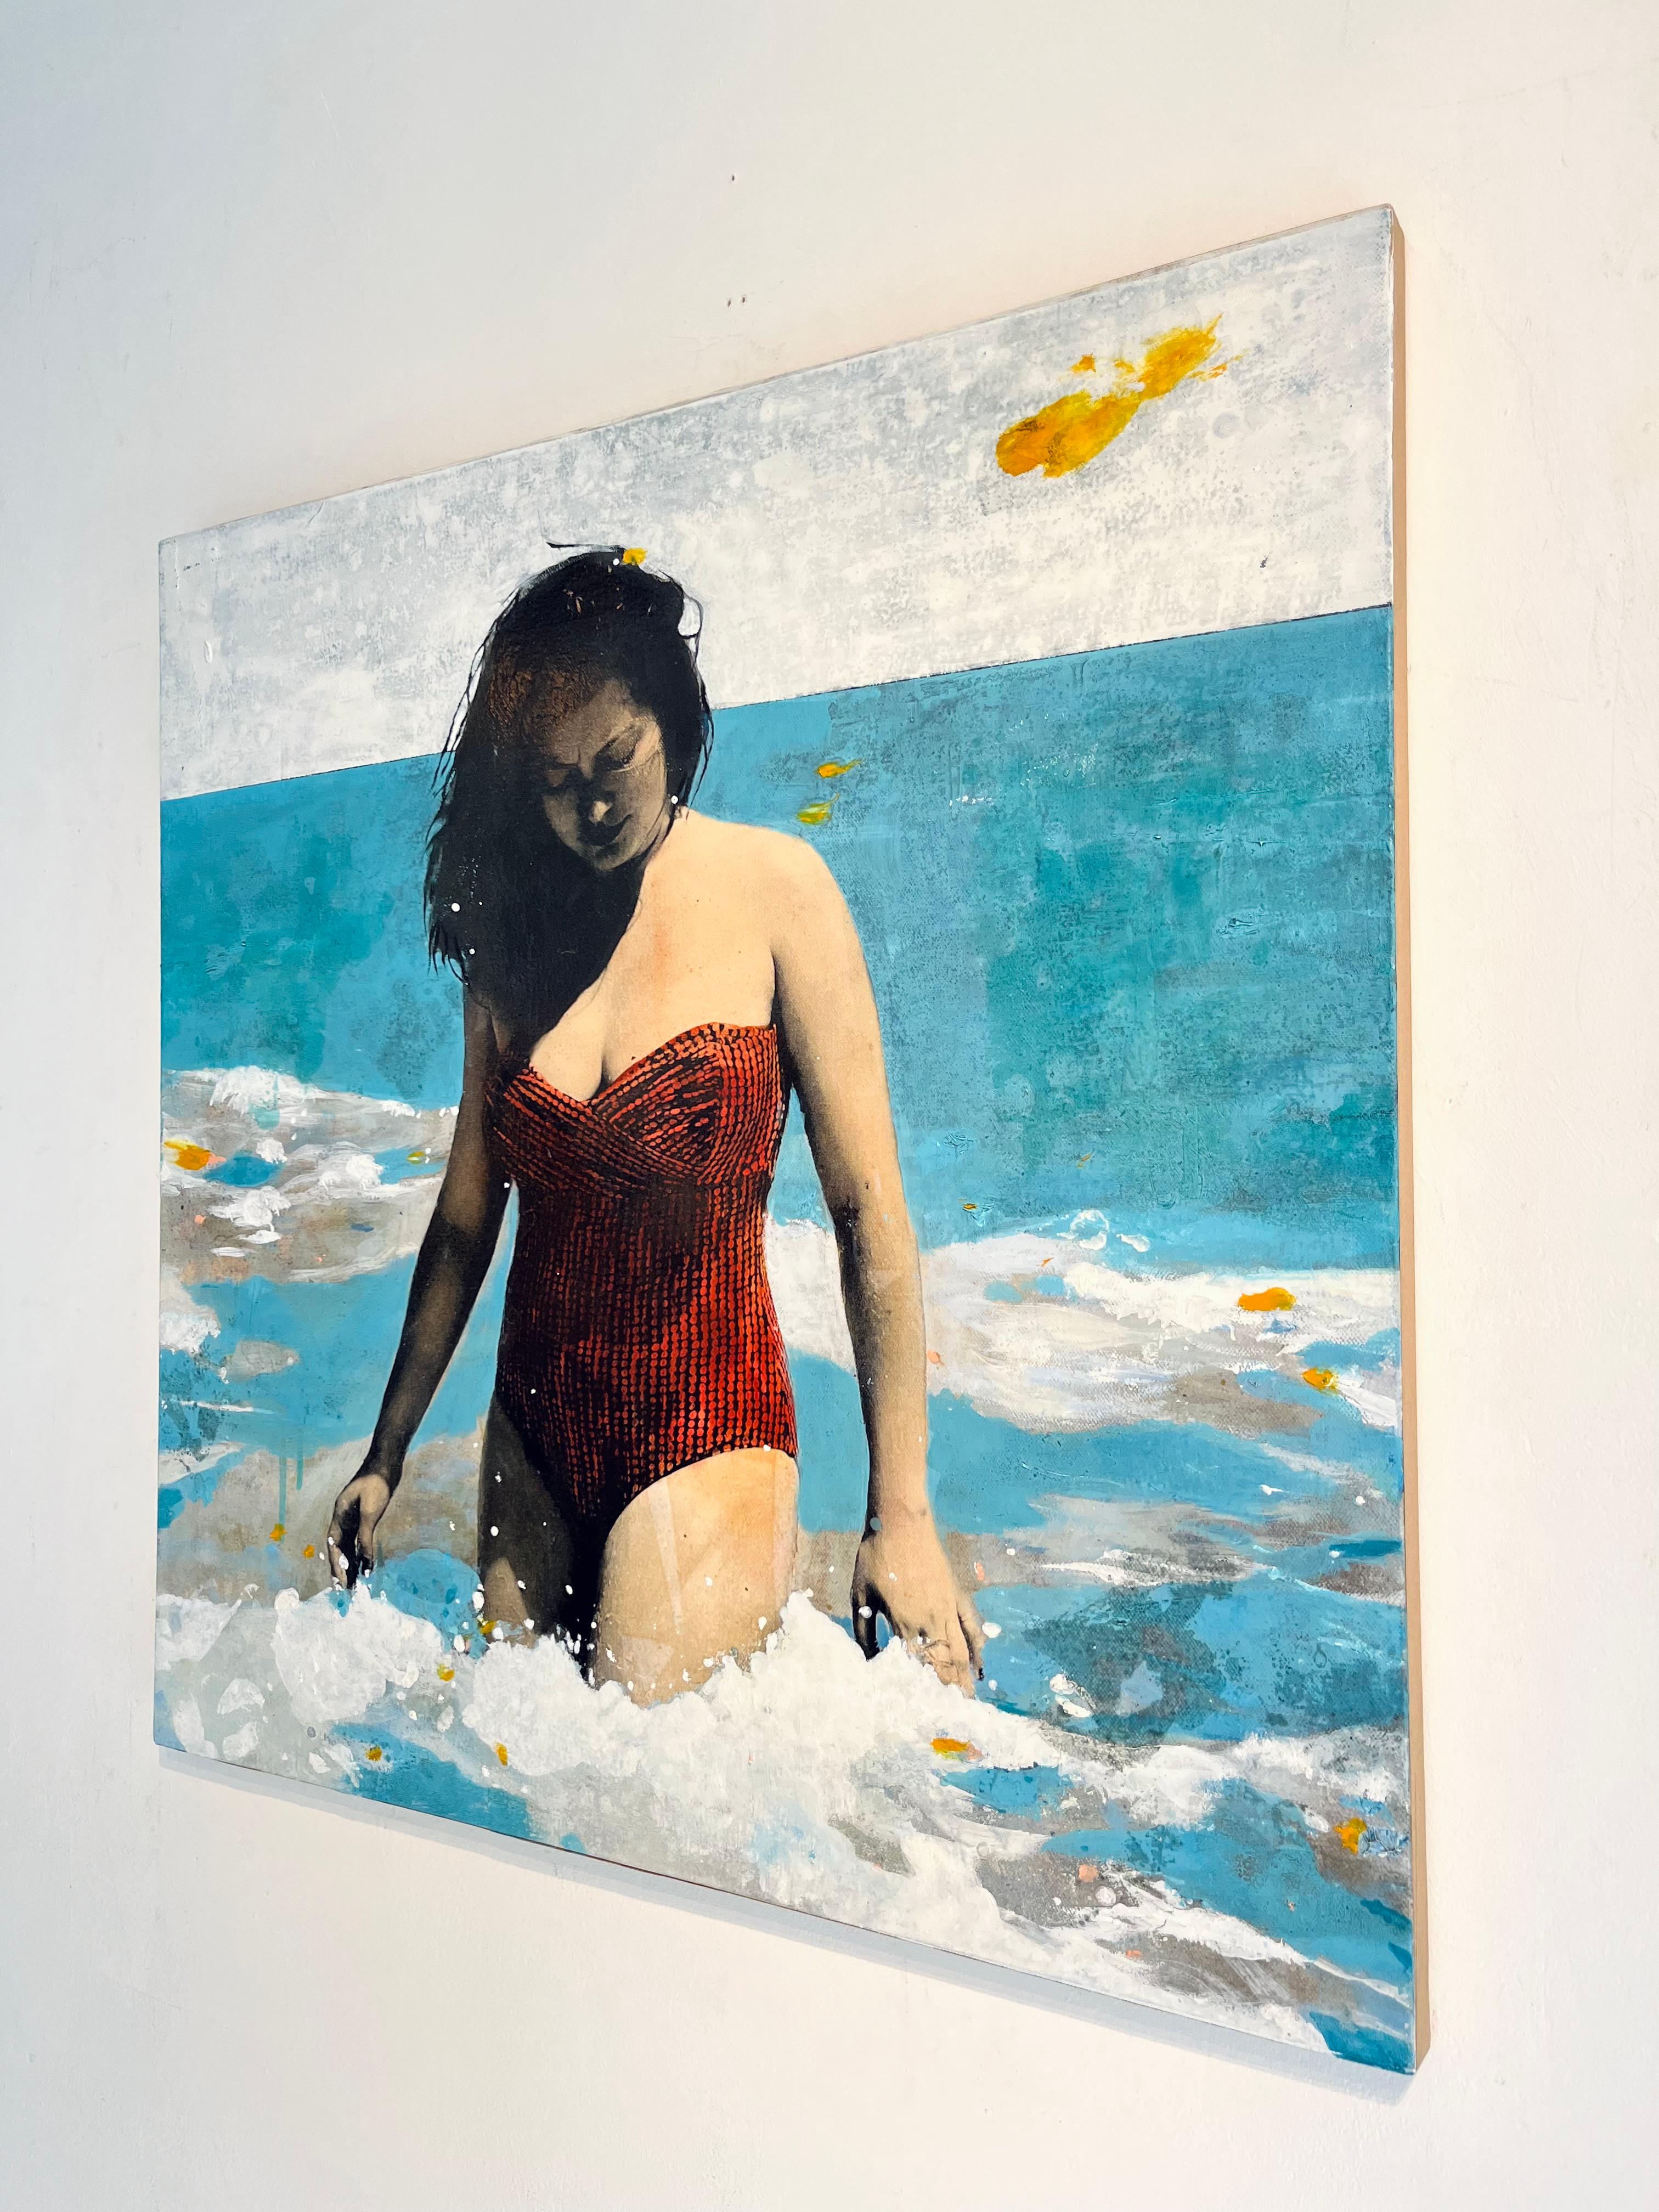 Waves, impressionnisme moderne figuratif original - peintures figuratives de paysages marins - Painting de Ayline Olukman